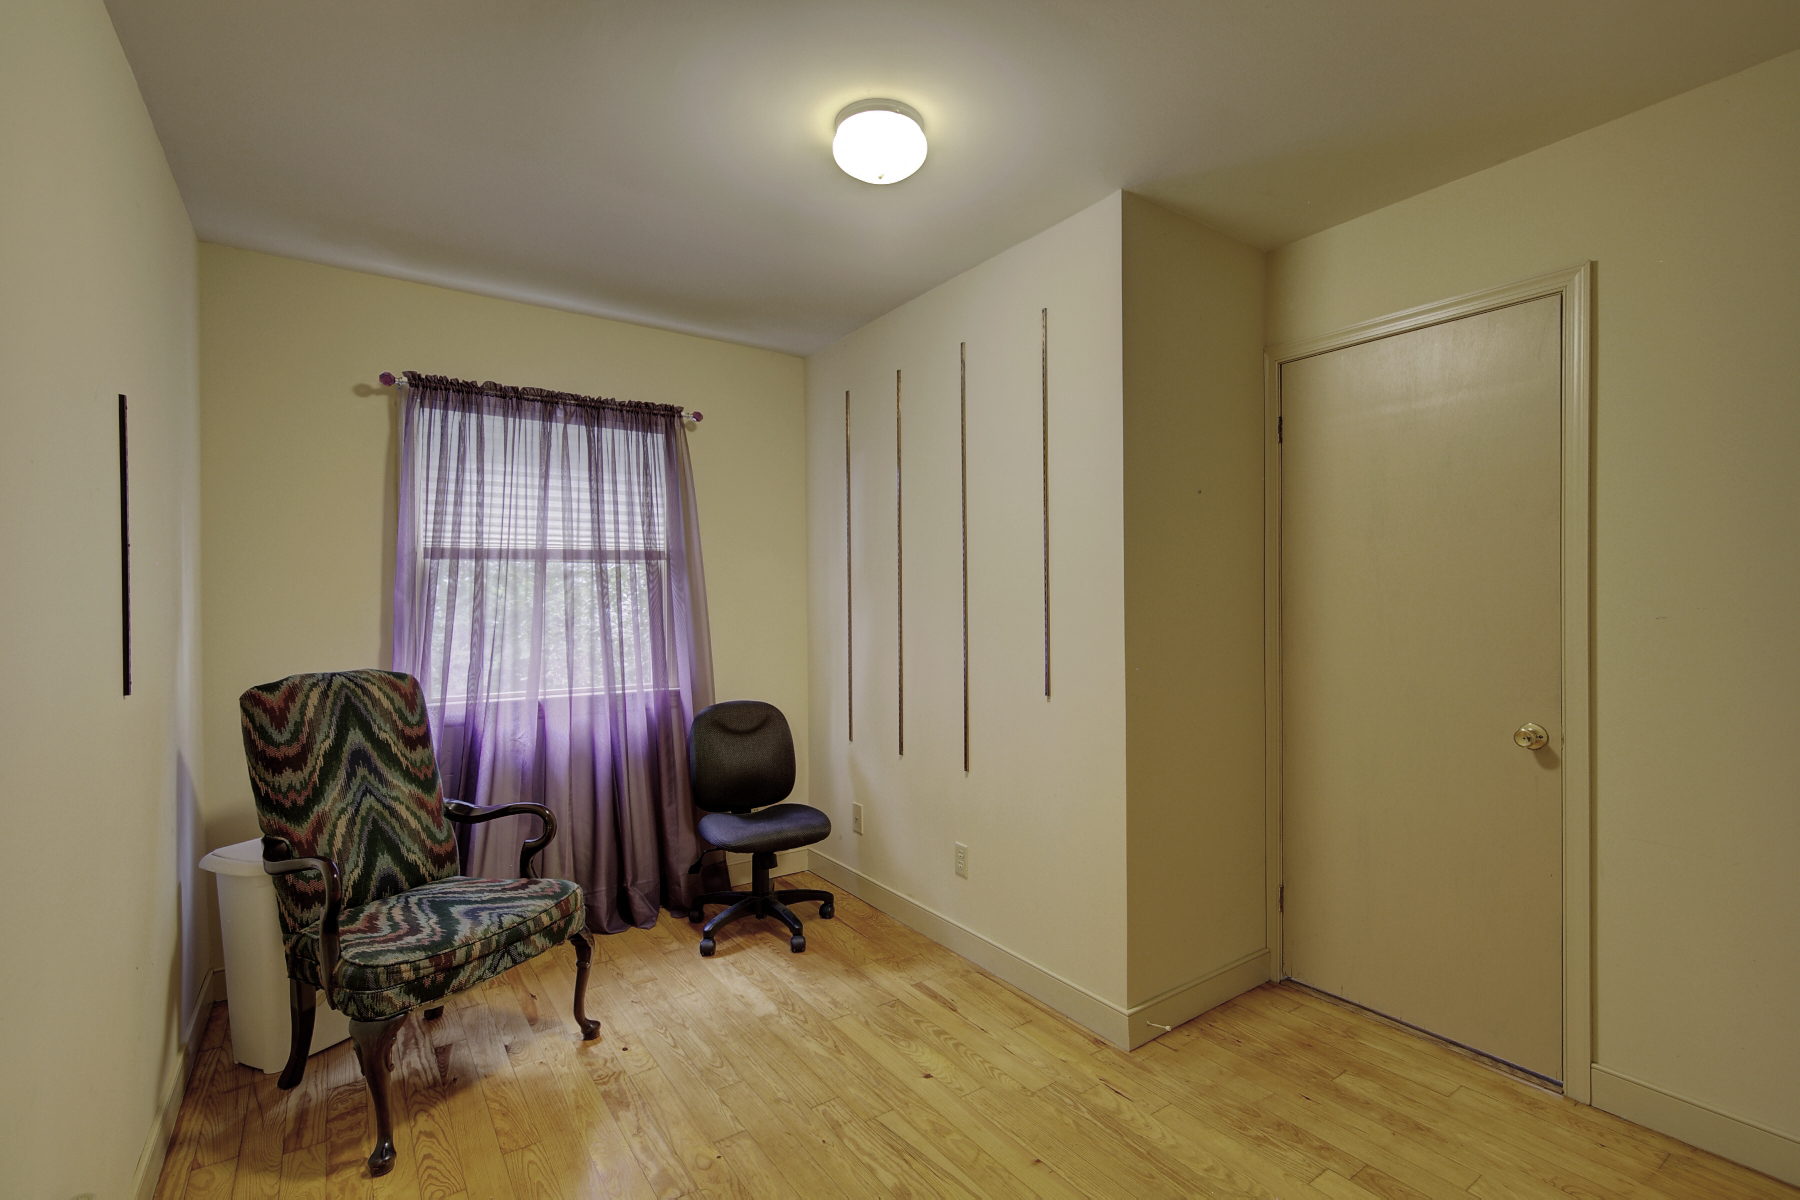 Hobby Room with closet and hardwood floors